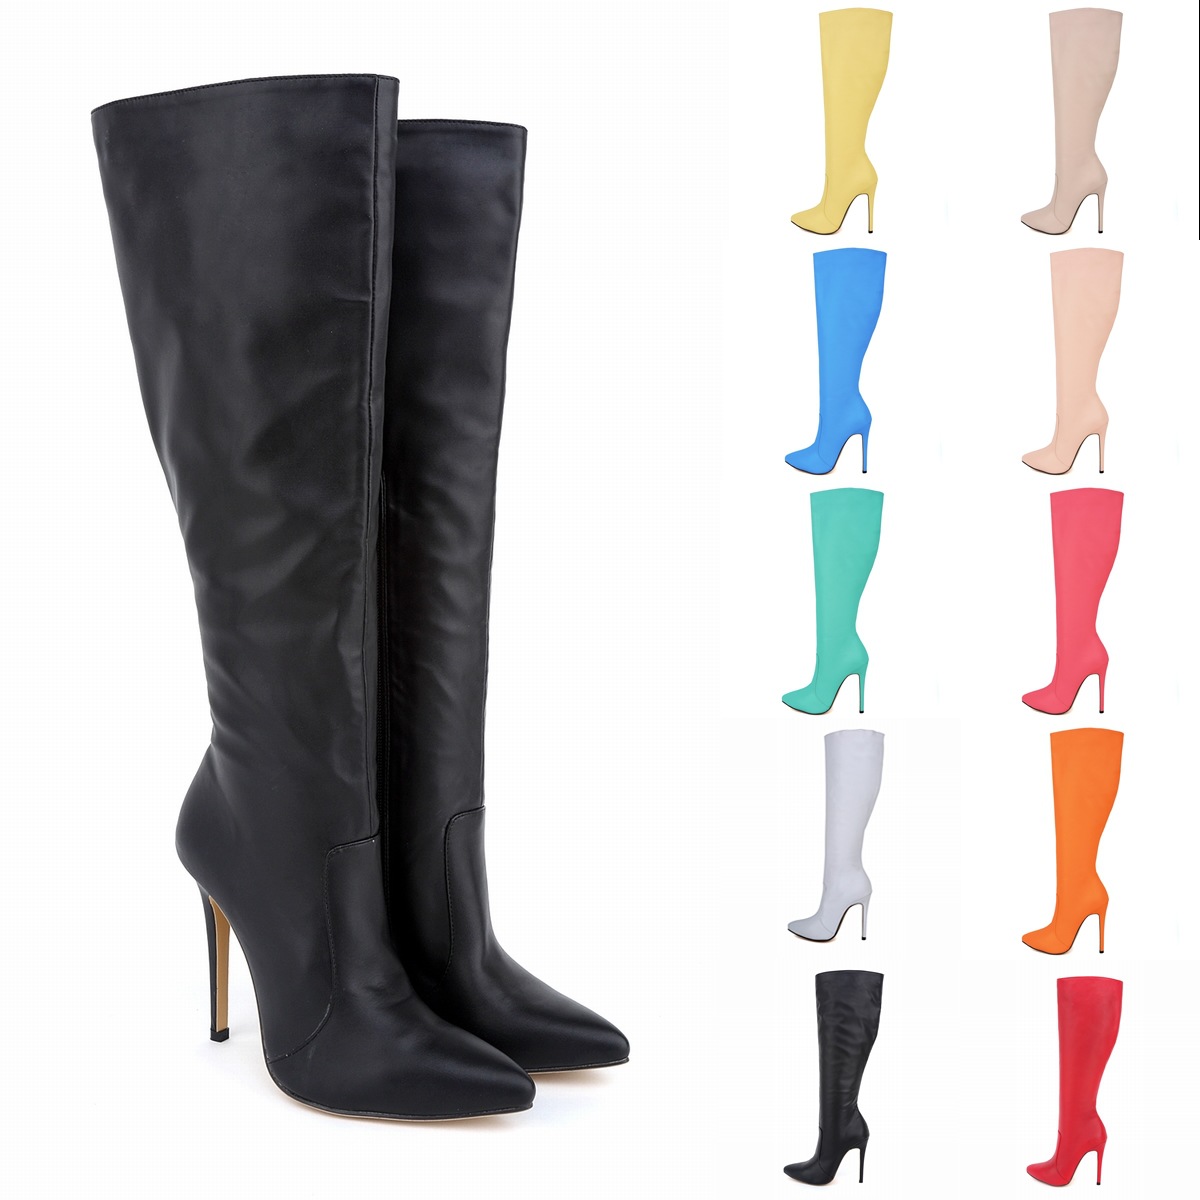 Loslandifen-2015-NEW-fall-winter-Wellington-boots-stilettos-high-heela-women-s-boots-shoes-769-3Y.jpg